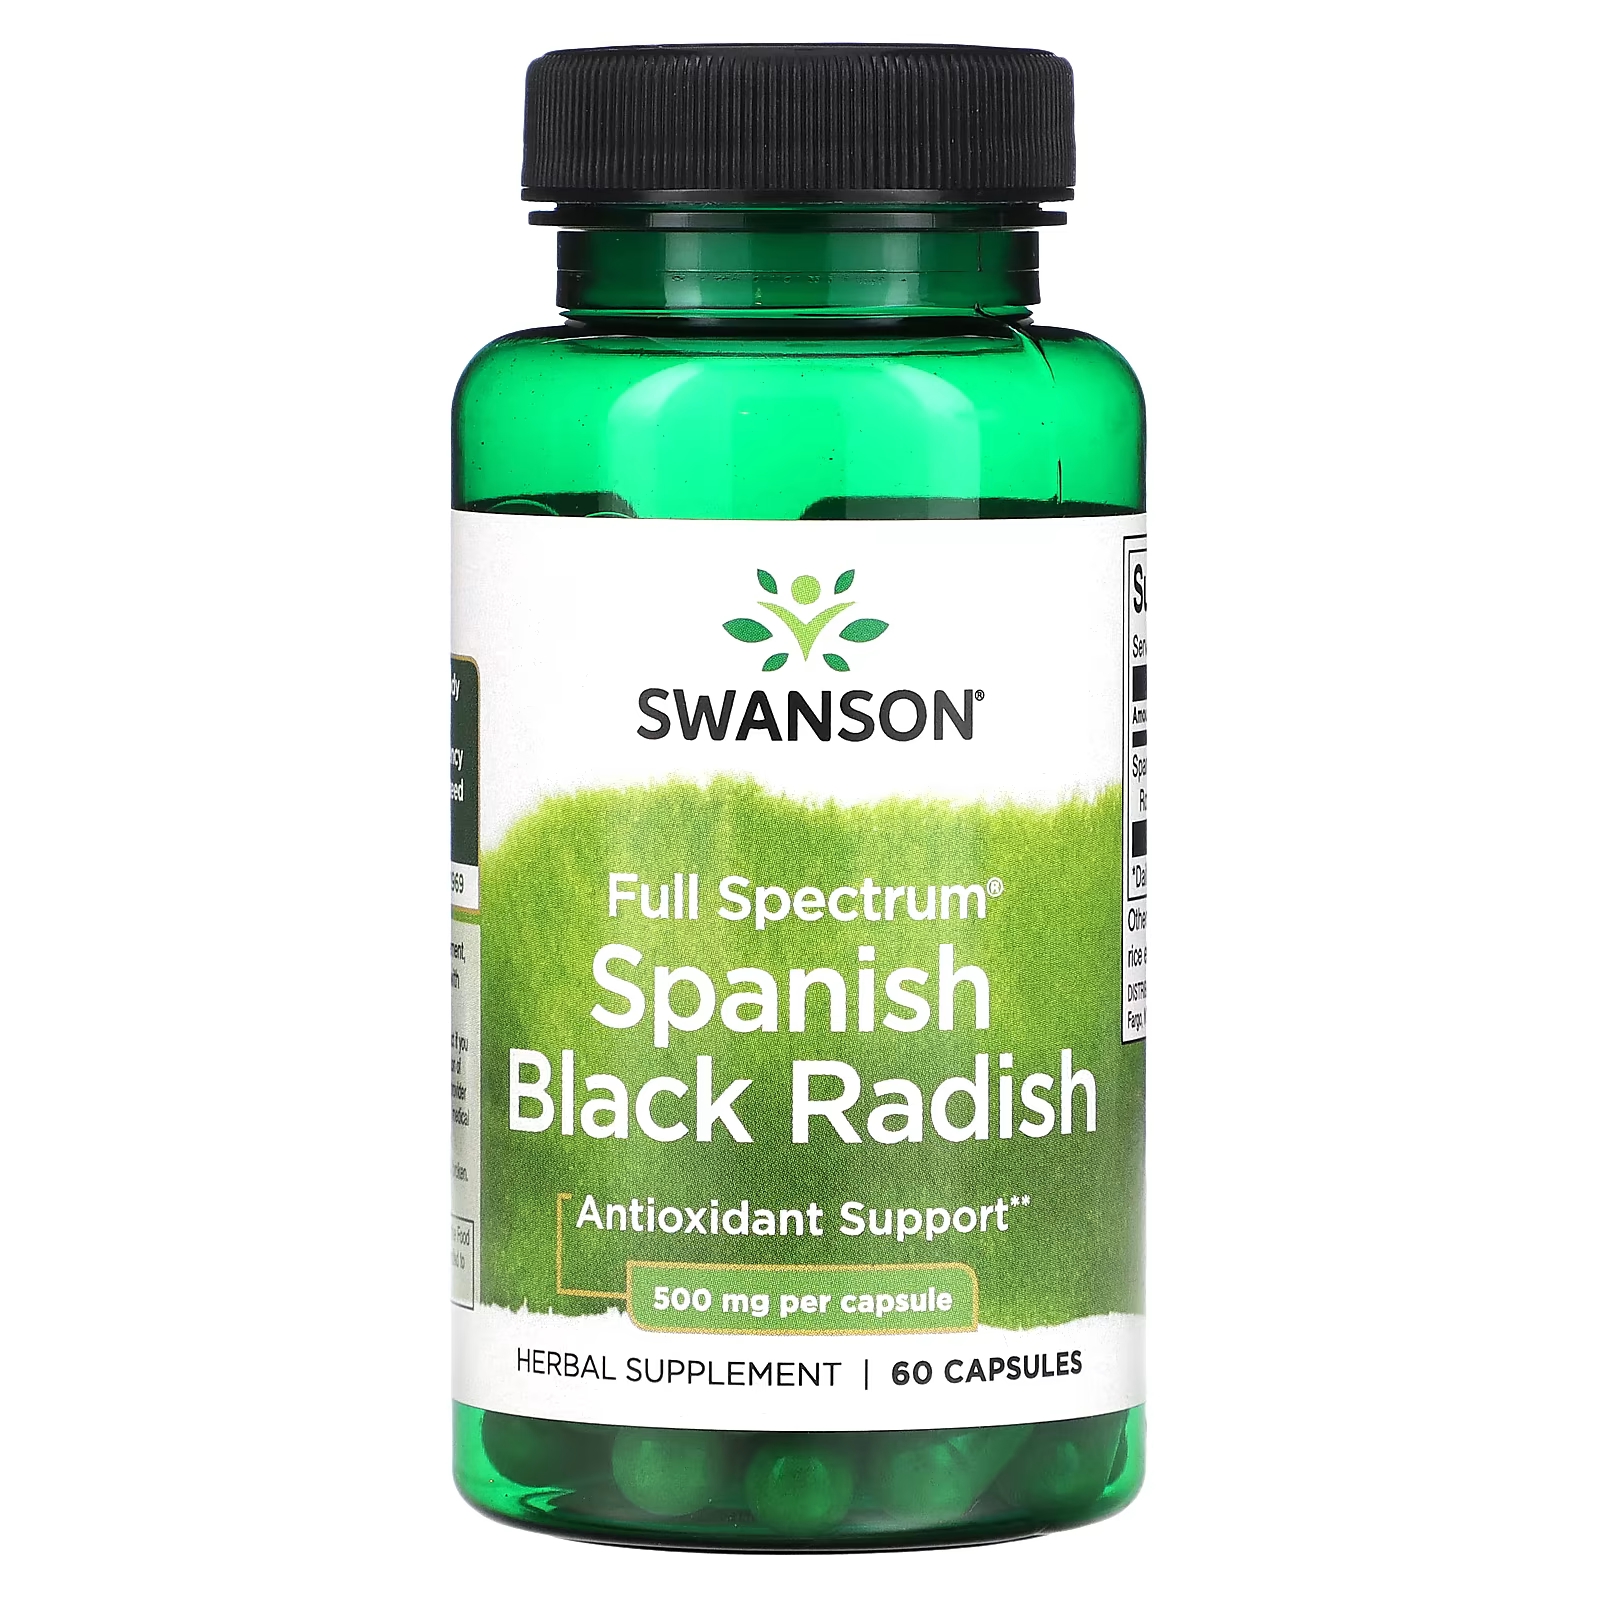 Испанская черная редька Swanson Full Spectrum 500 мг, 60 капсул swanson испанская черная редька полного спектра 500 мг 60 капсул